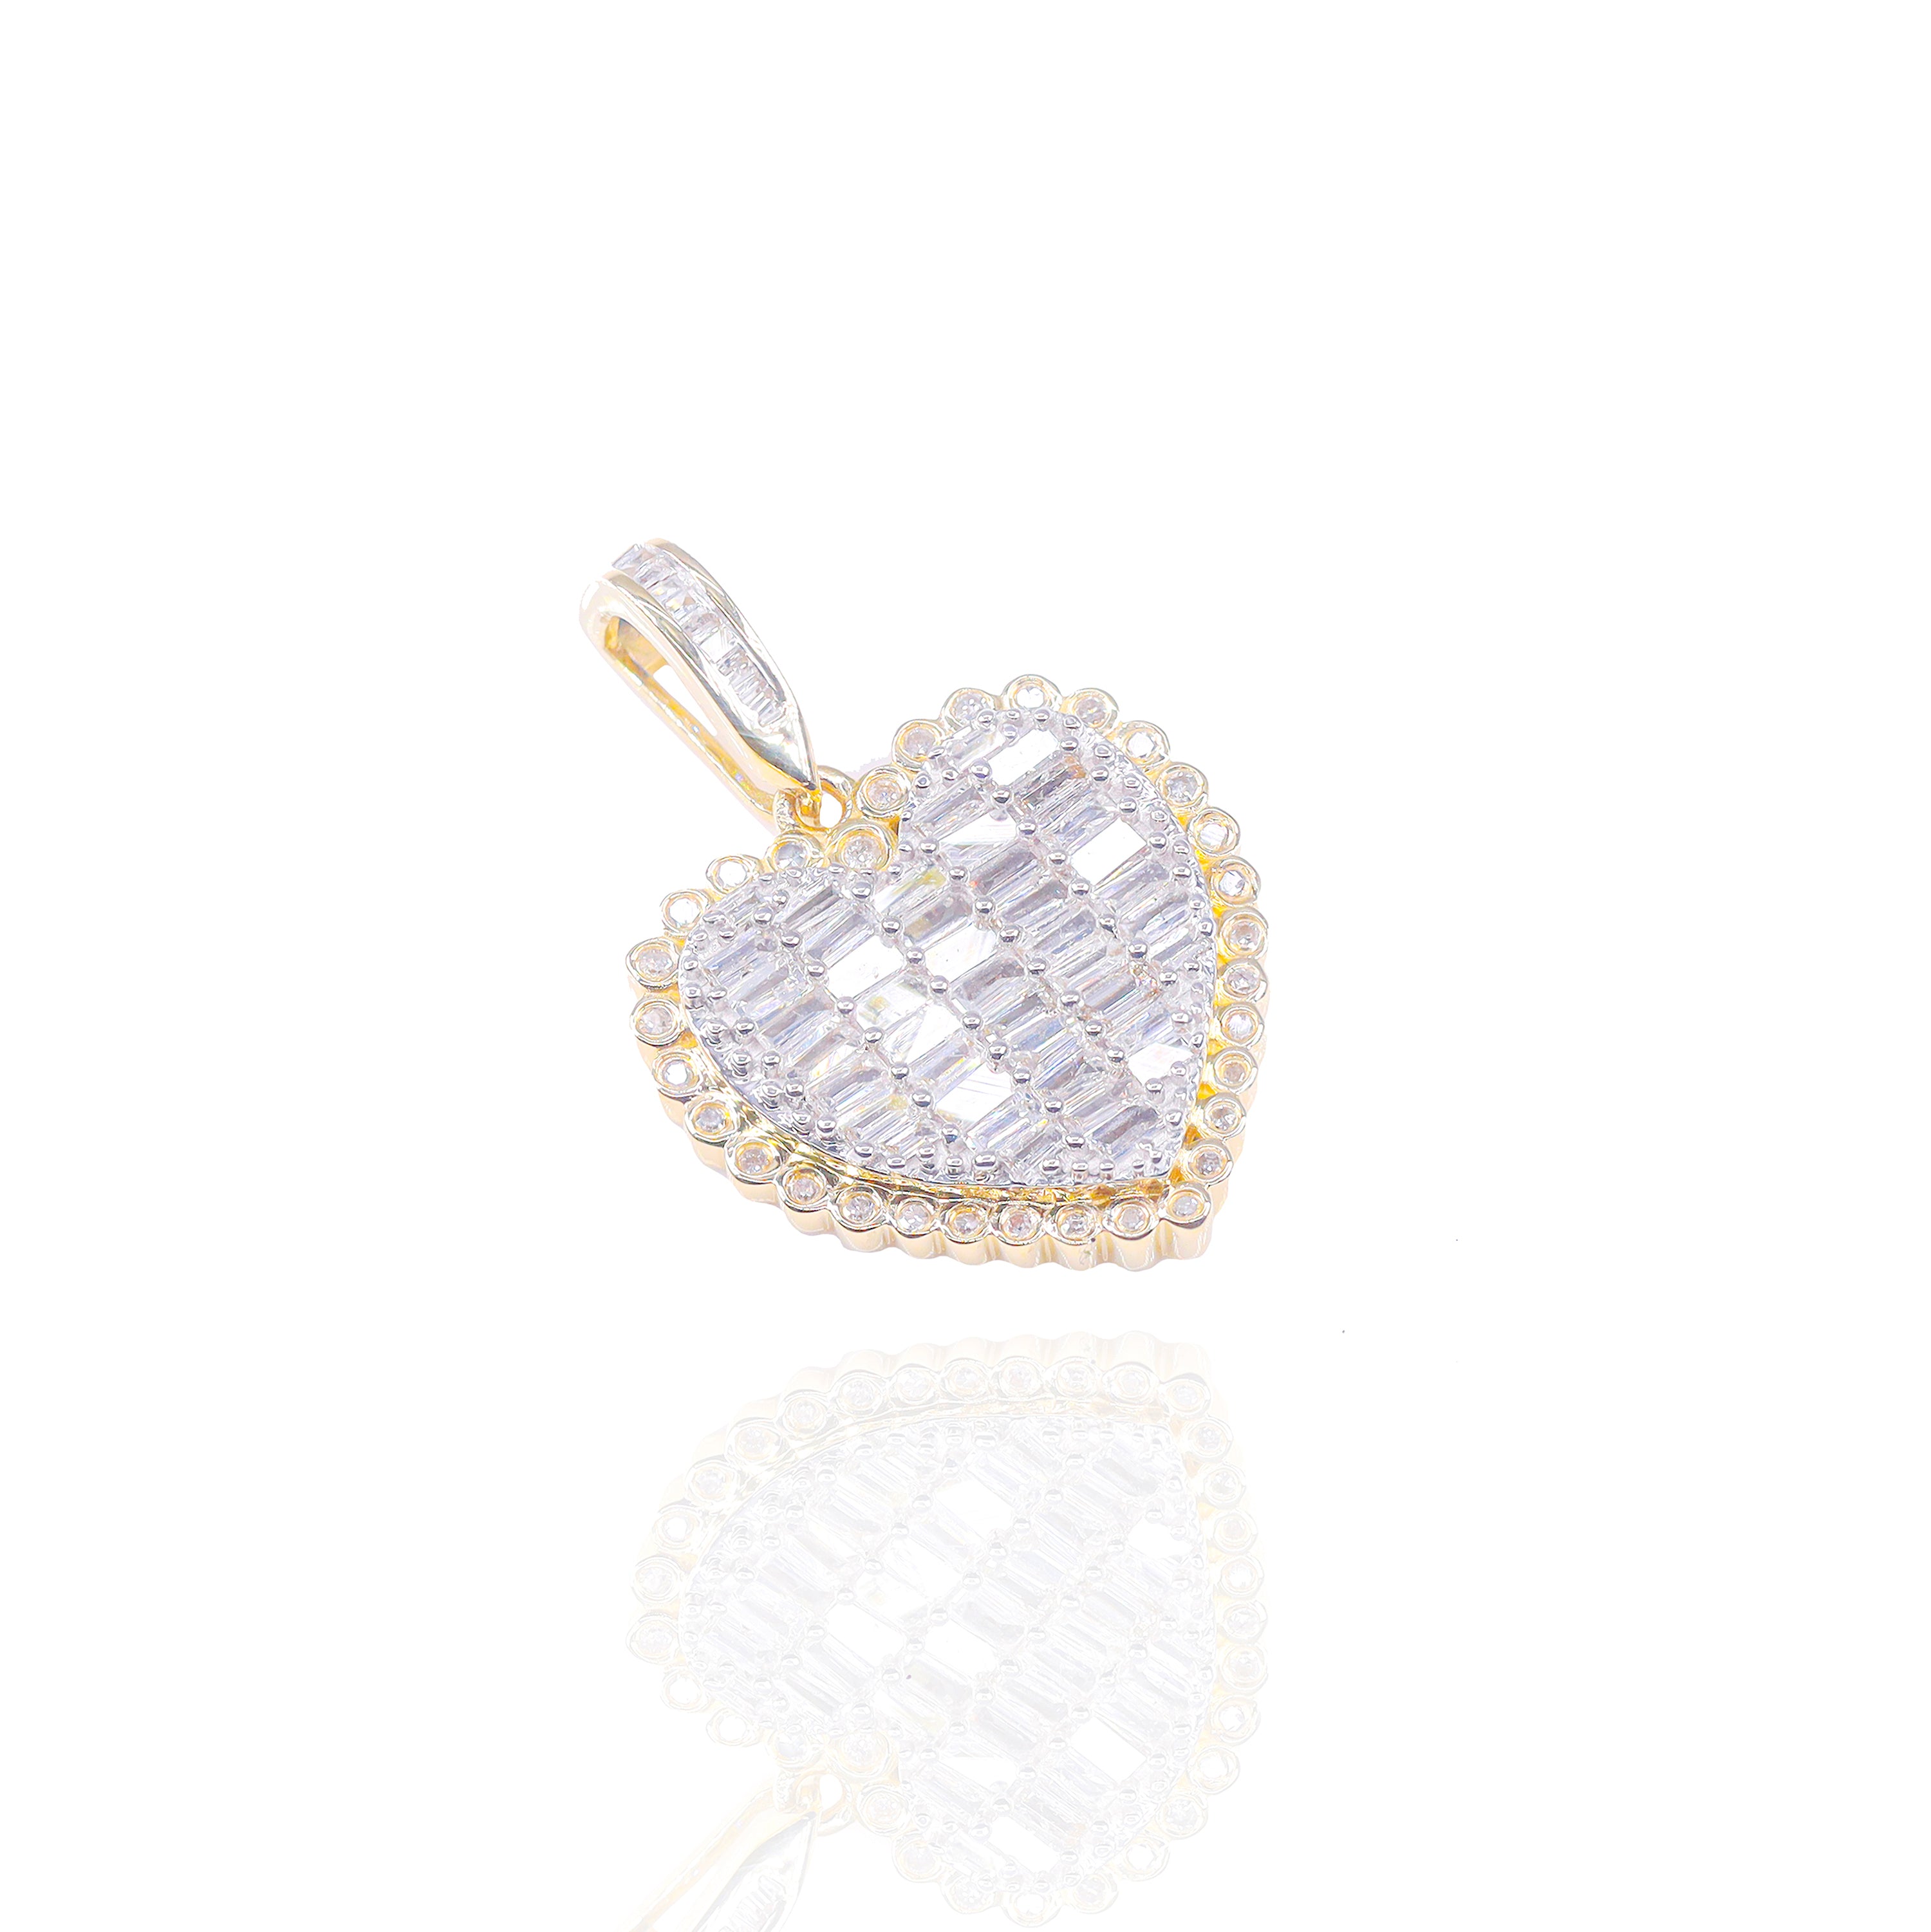 Flat Baguette Diamond Heart Pendant